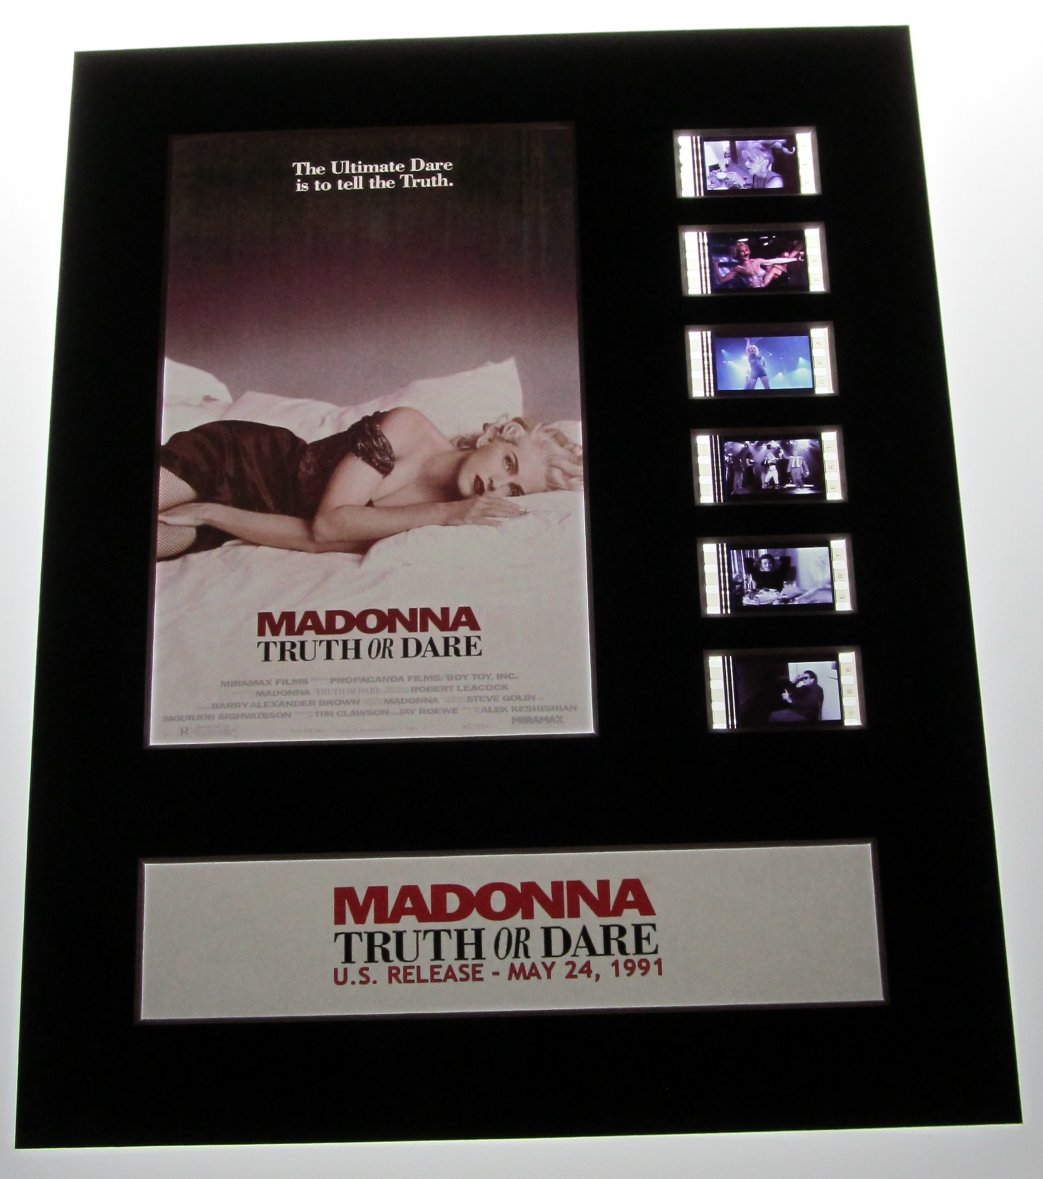 MADONNA TRUTH OR DARE 35mm Movie Film Cell Display 8x10 Presentation